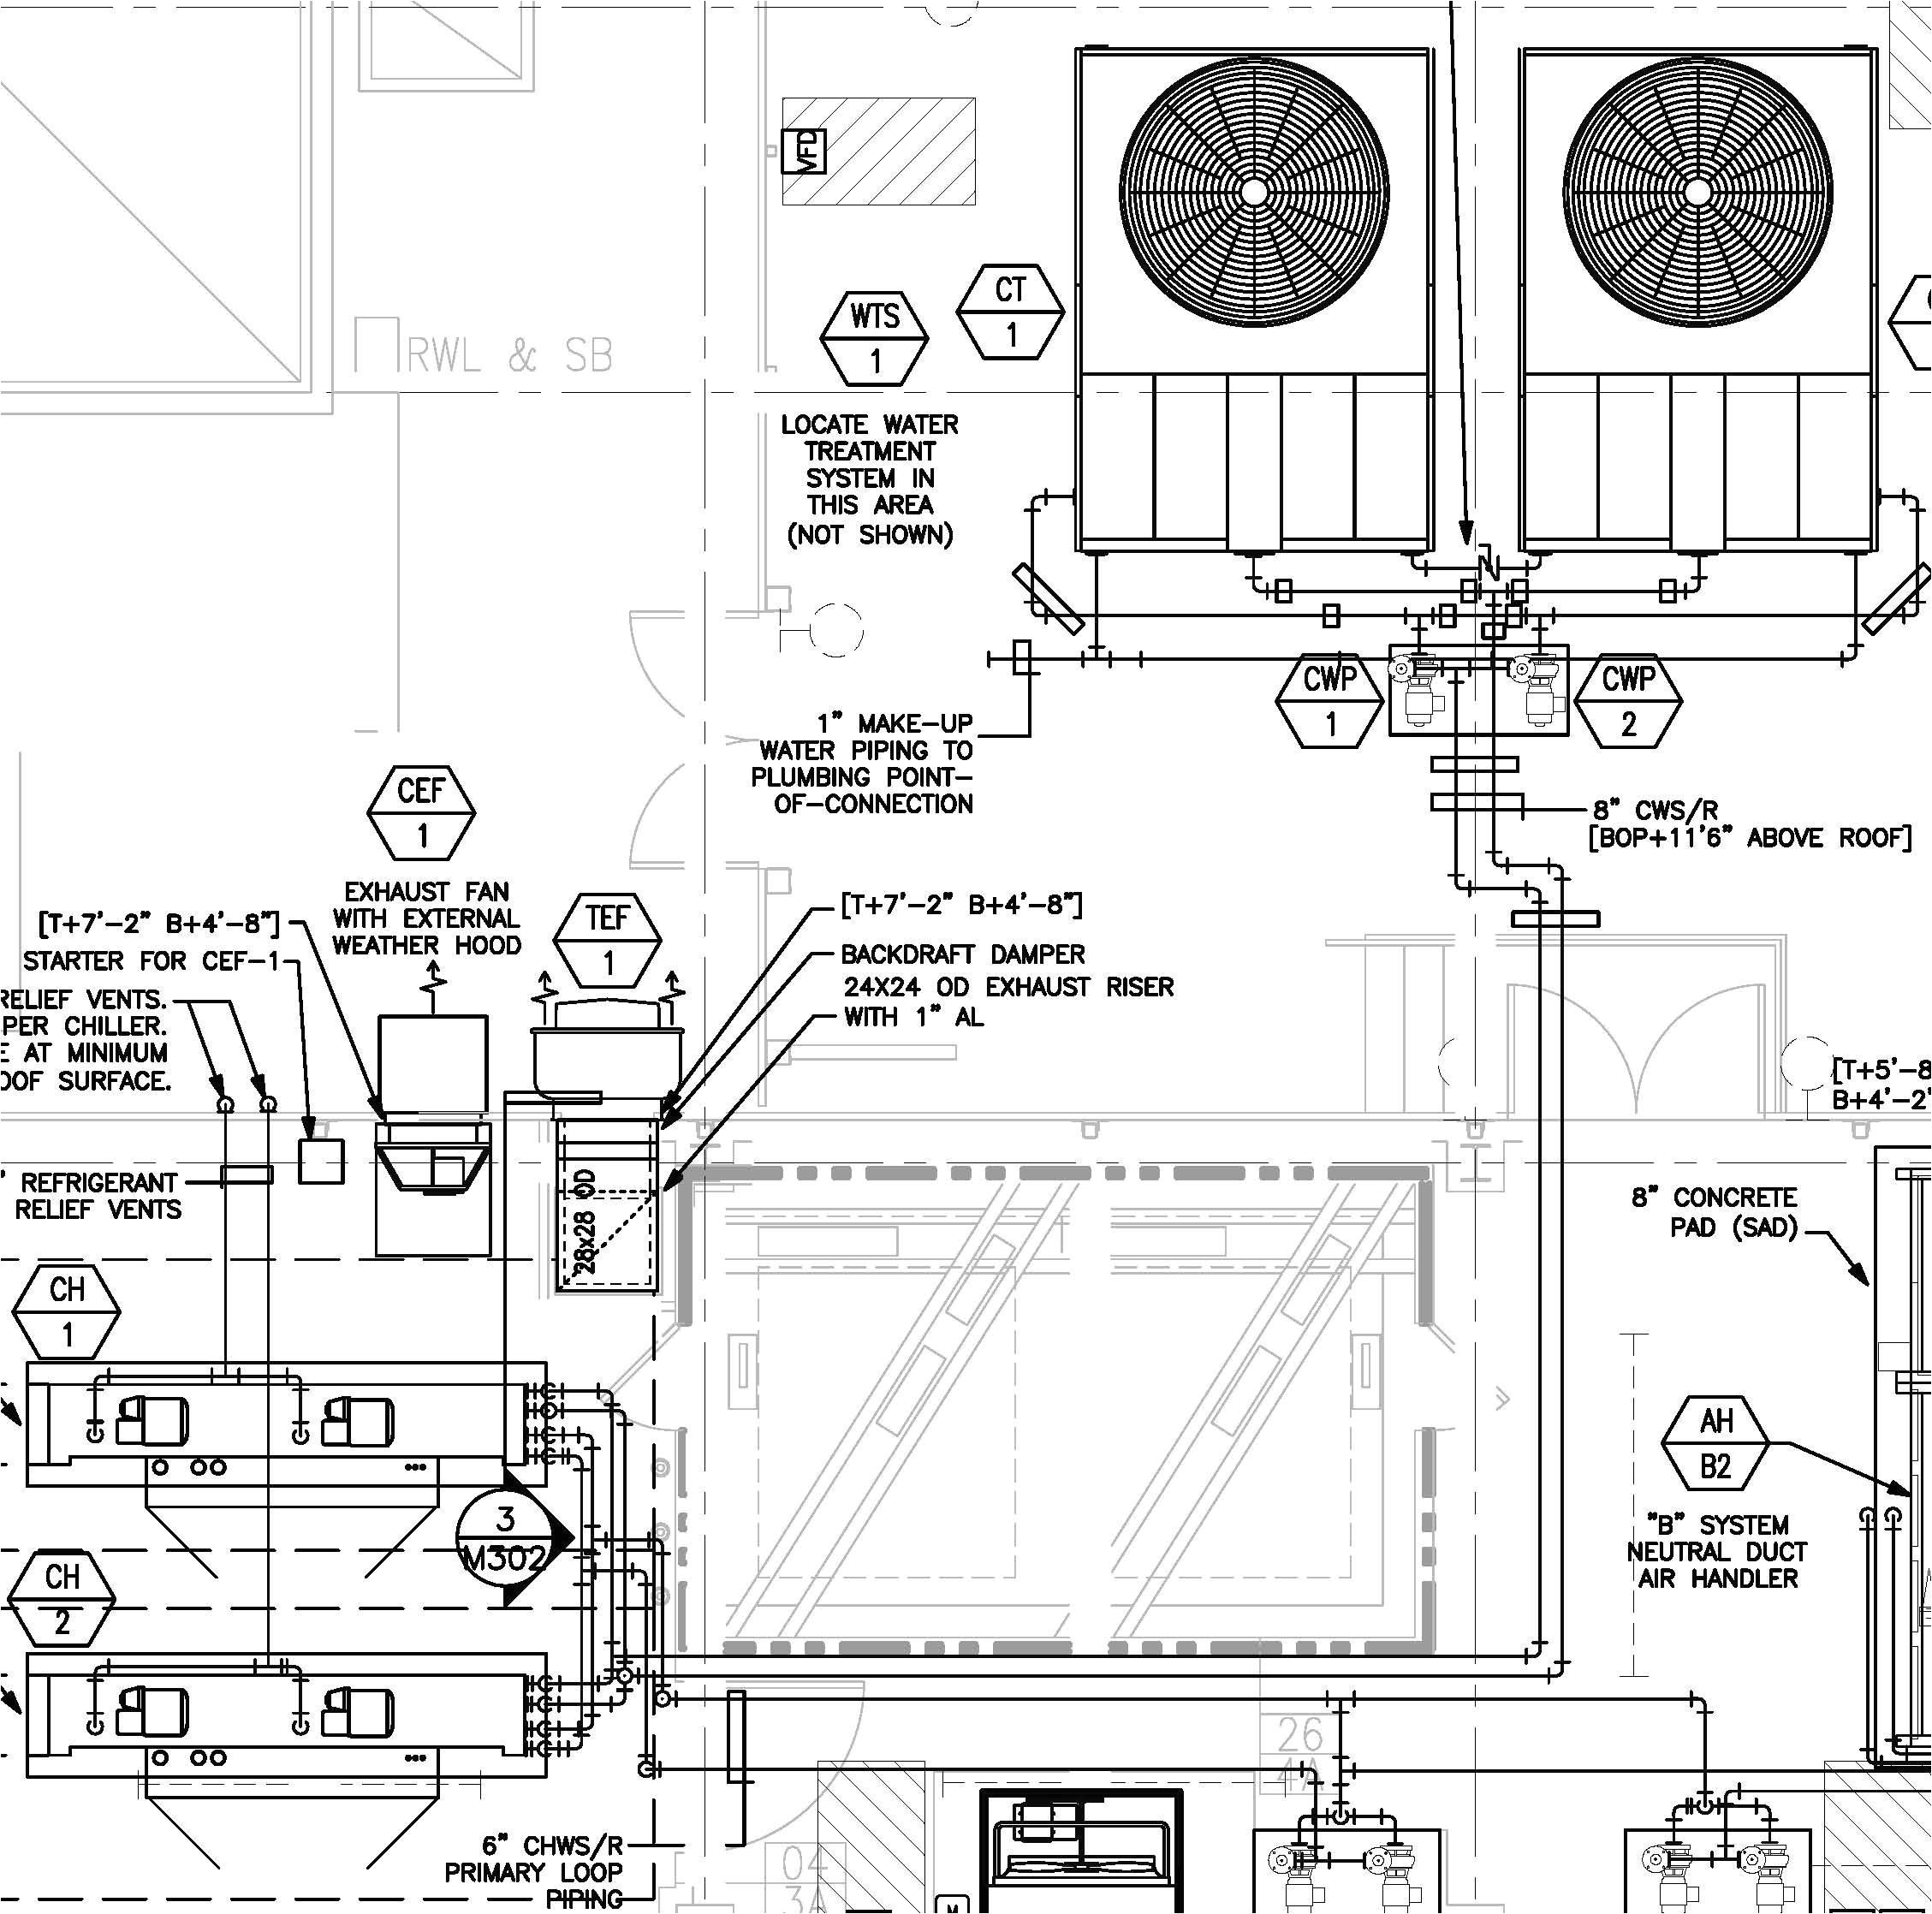 goodman ac unit wiring diagram goodman ac unit wiring diagram a trane xv95 furnace wiring diagram